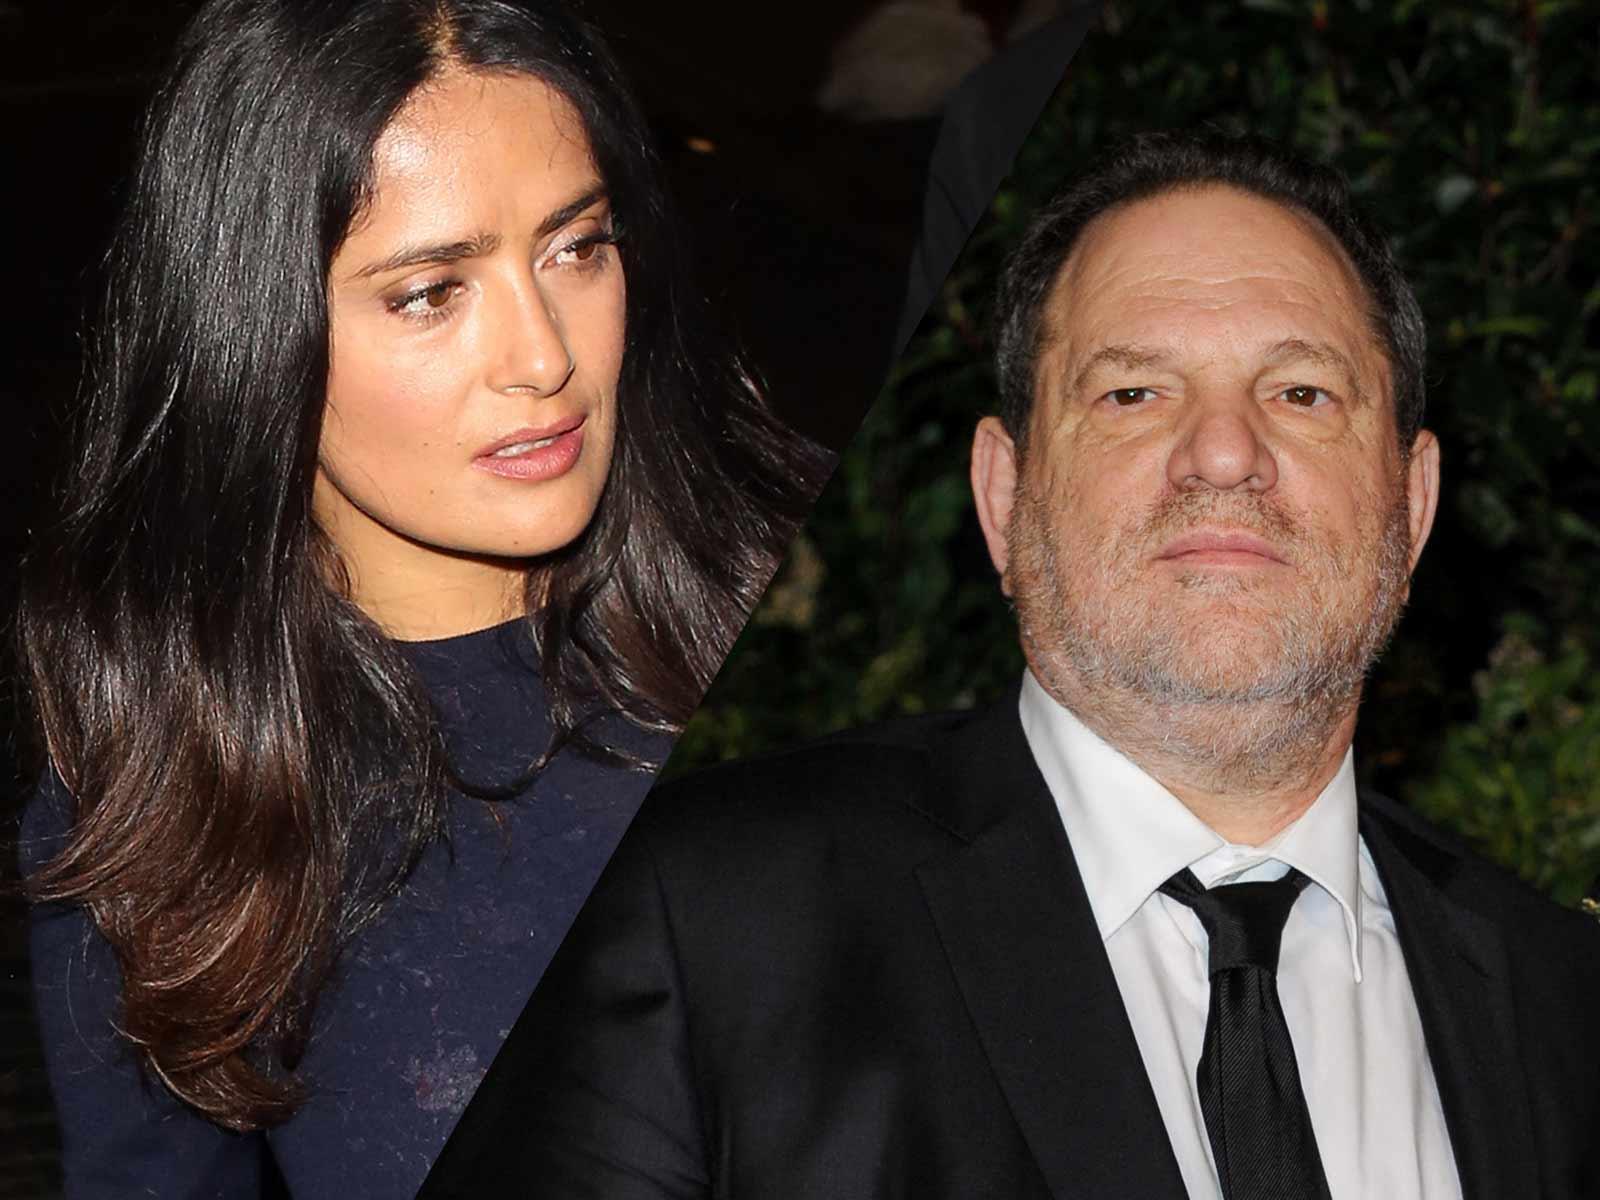 Salma Hayek Claims Harvey Weinstein Threatened to Kill Her After Refusing Advances